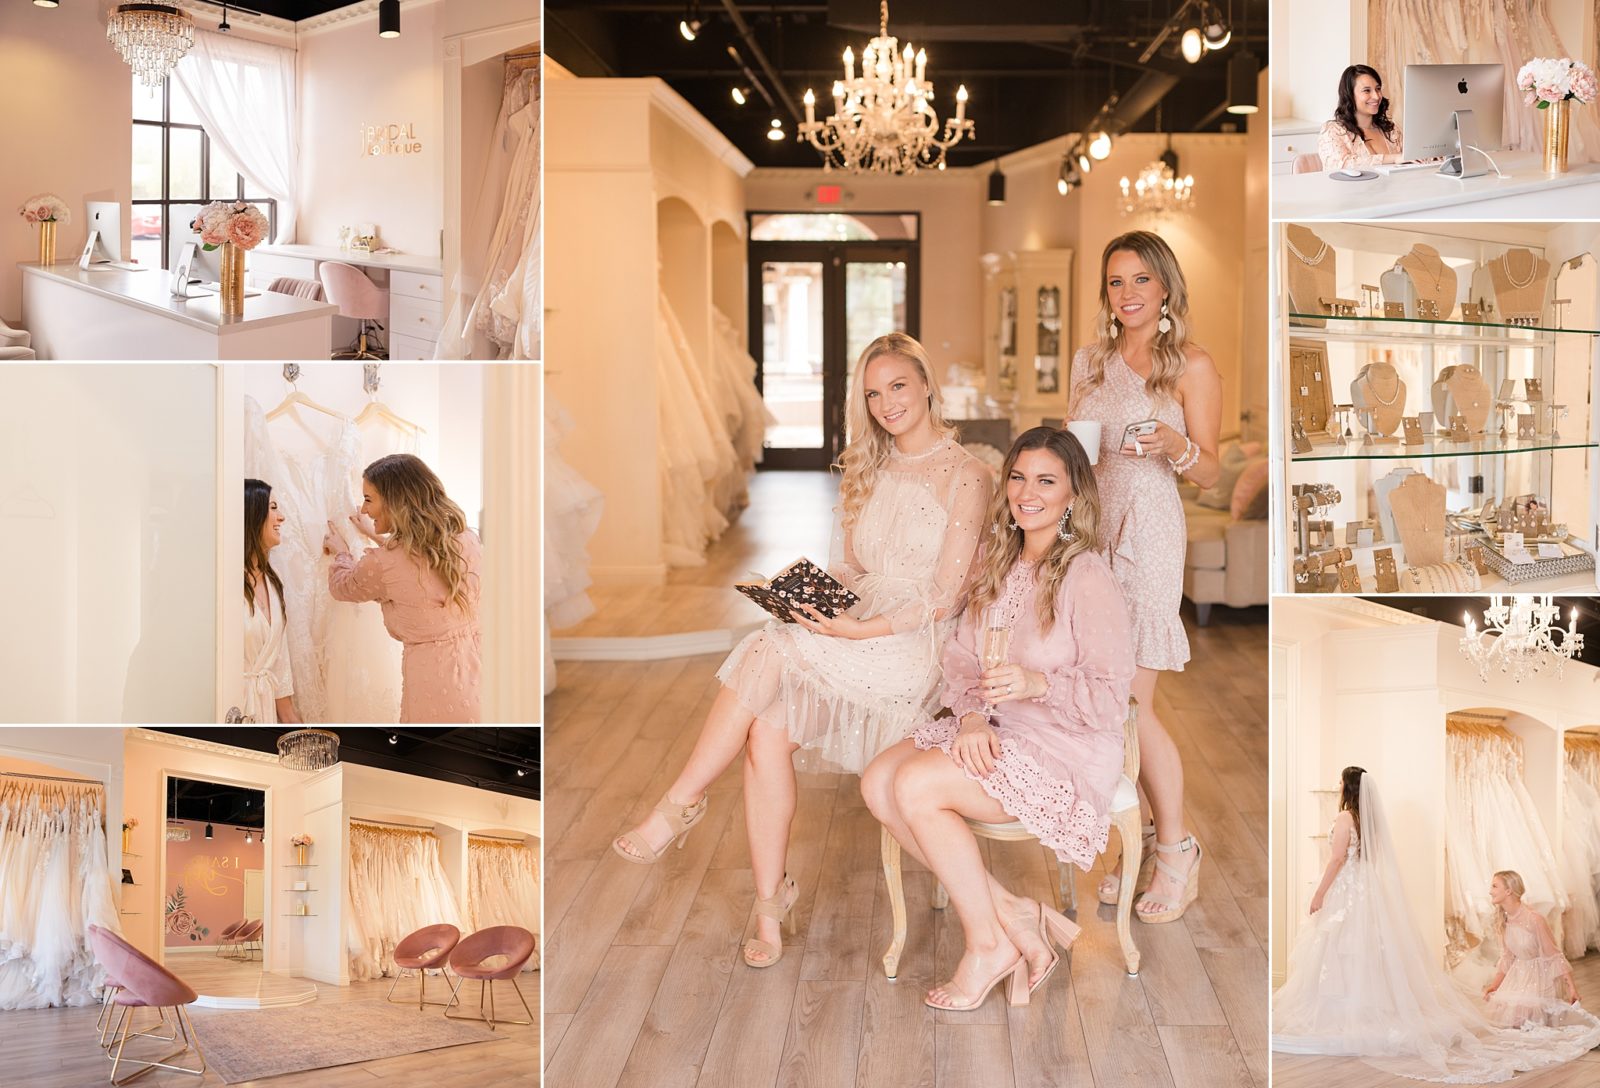 J Bridal Boutique Tucson wedding dresses branding photos